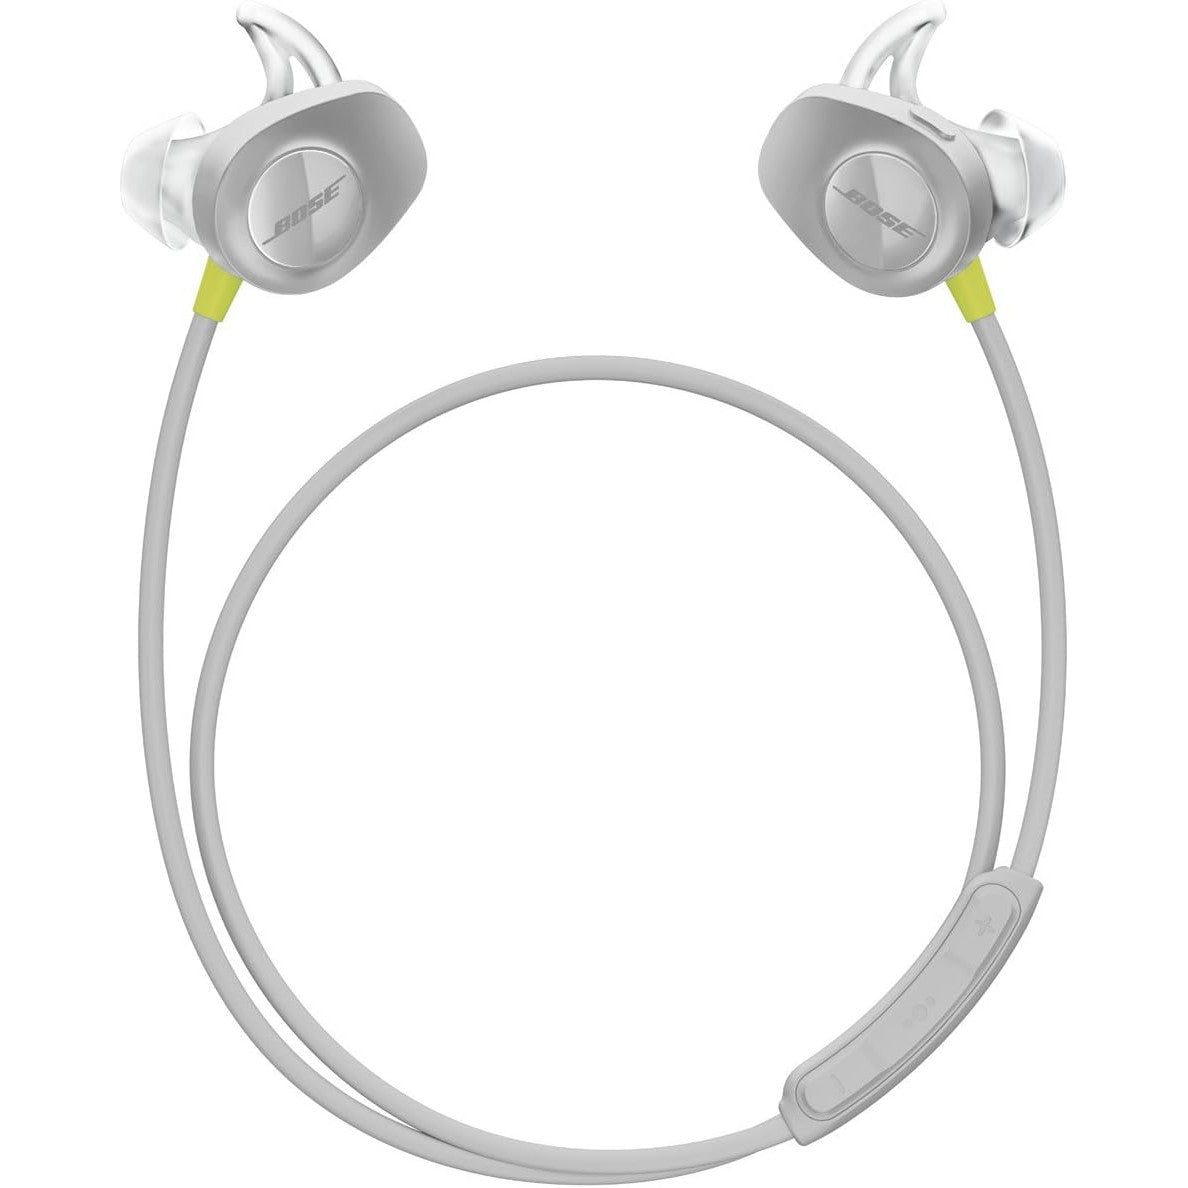 Bose Soundsport In-Ear Wireless Headphones - Citron - Refurbished Pristine